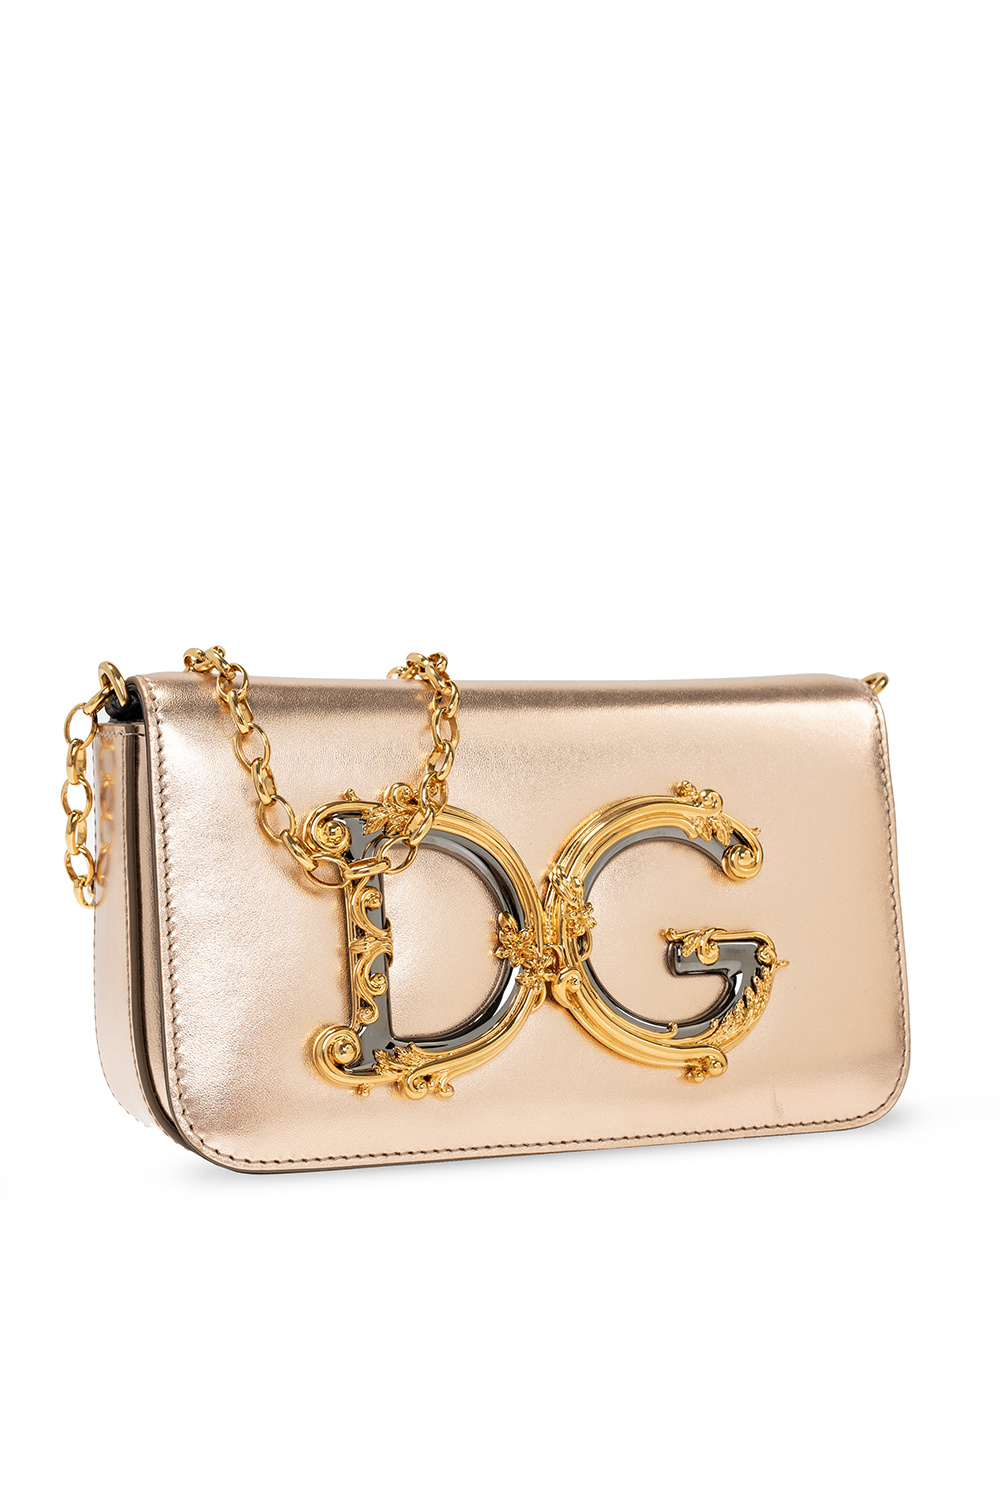 Dolce & Gabbana ‘Sicily Medium’ Shoulder Bag Women's Beige | Vitkac